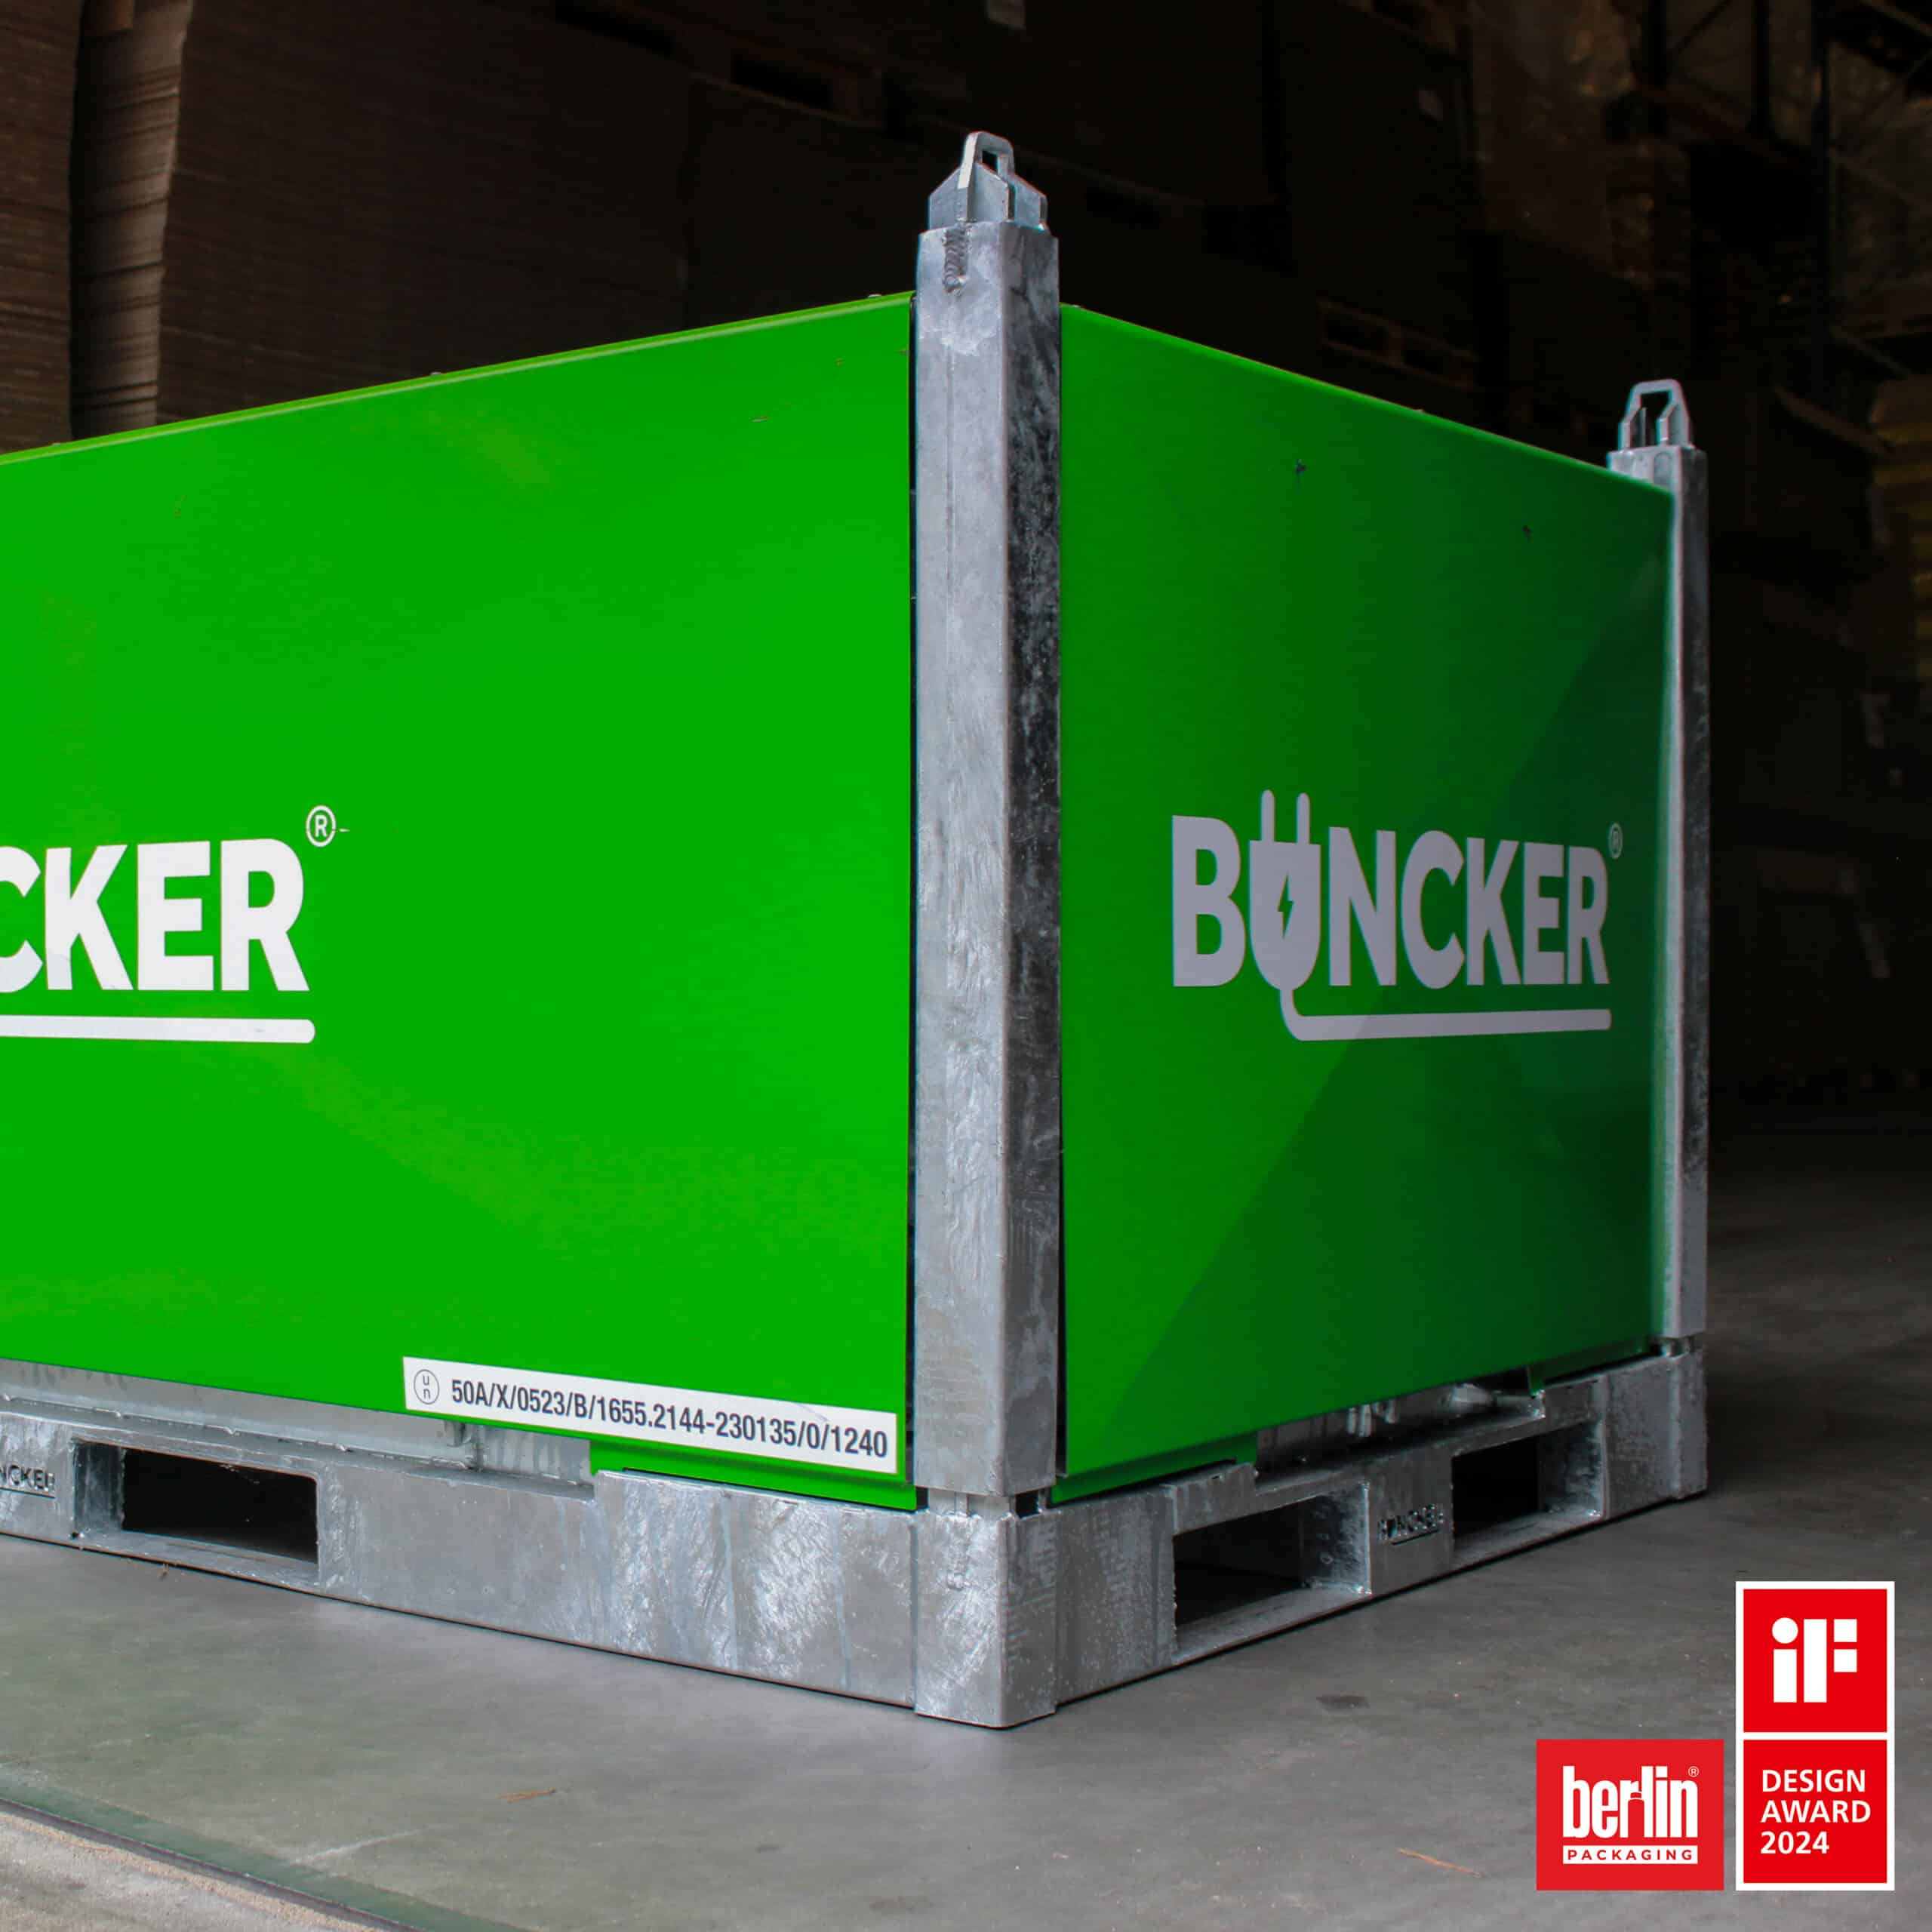 Buncker Picture 1 IF Design Berlin Packaging vierkant scaled News, Uncategorized